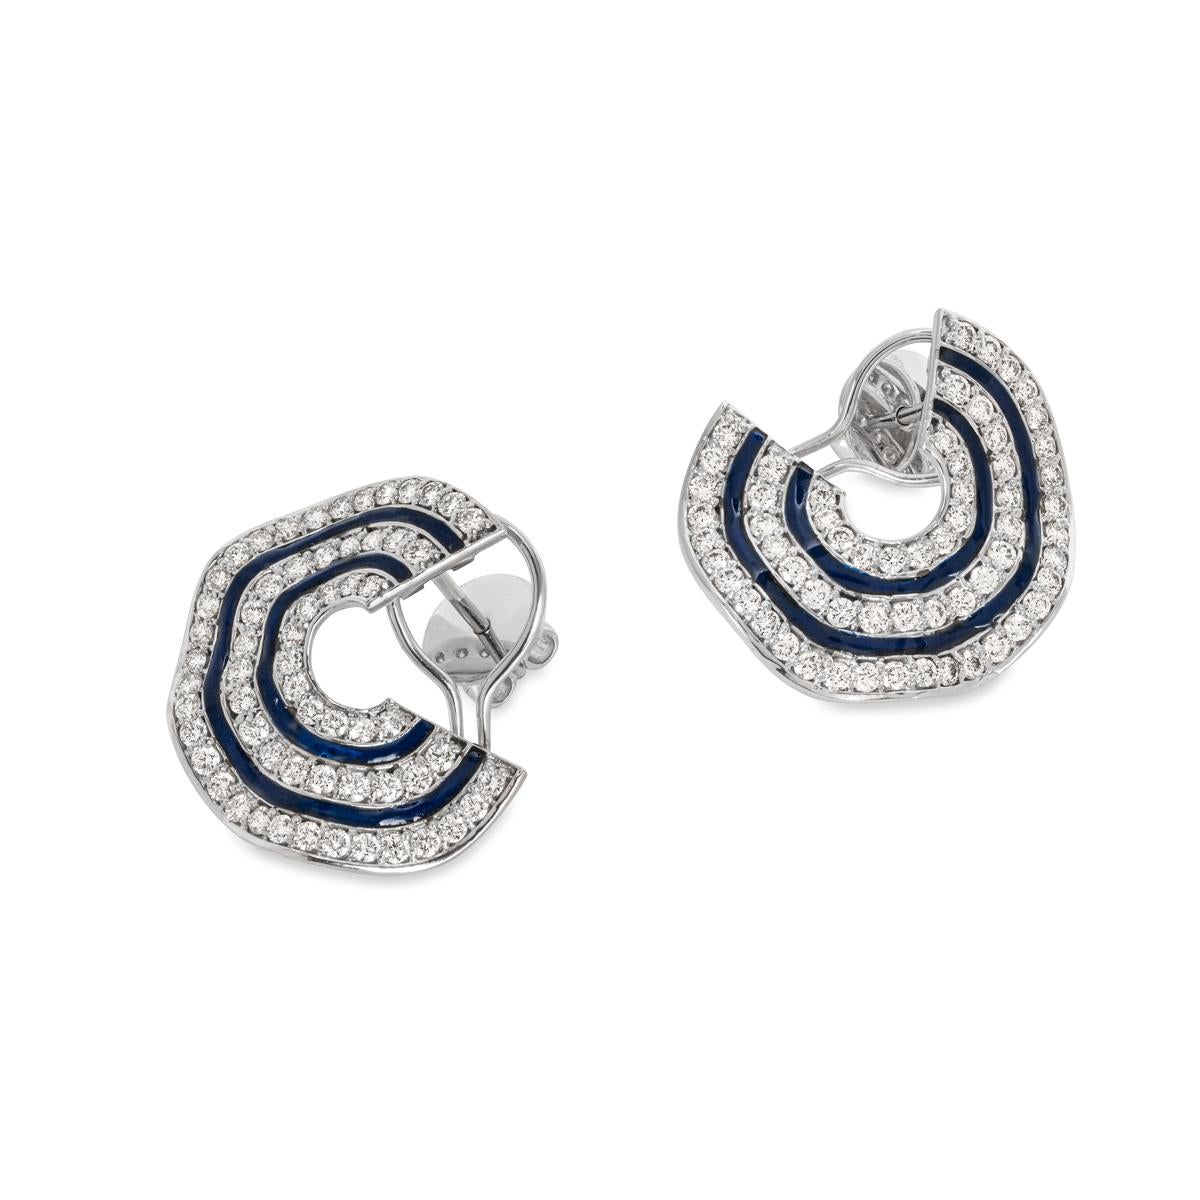 Round Cut Diamond and Enamel Earrings 3.28 Carat